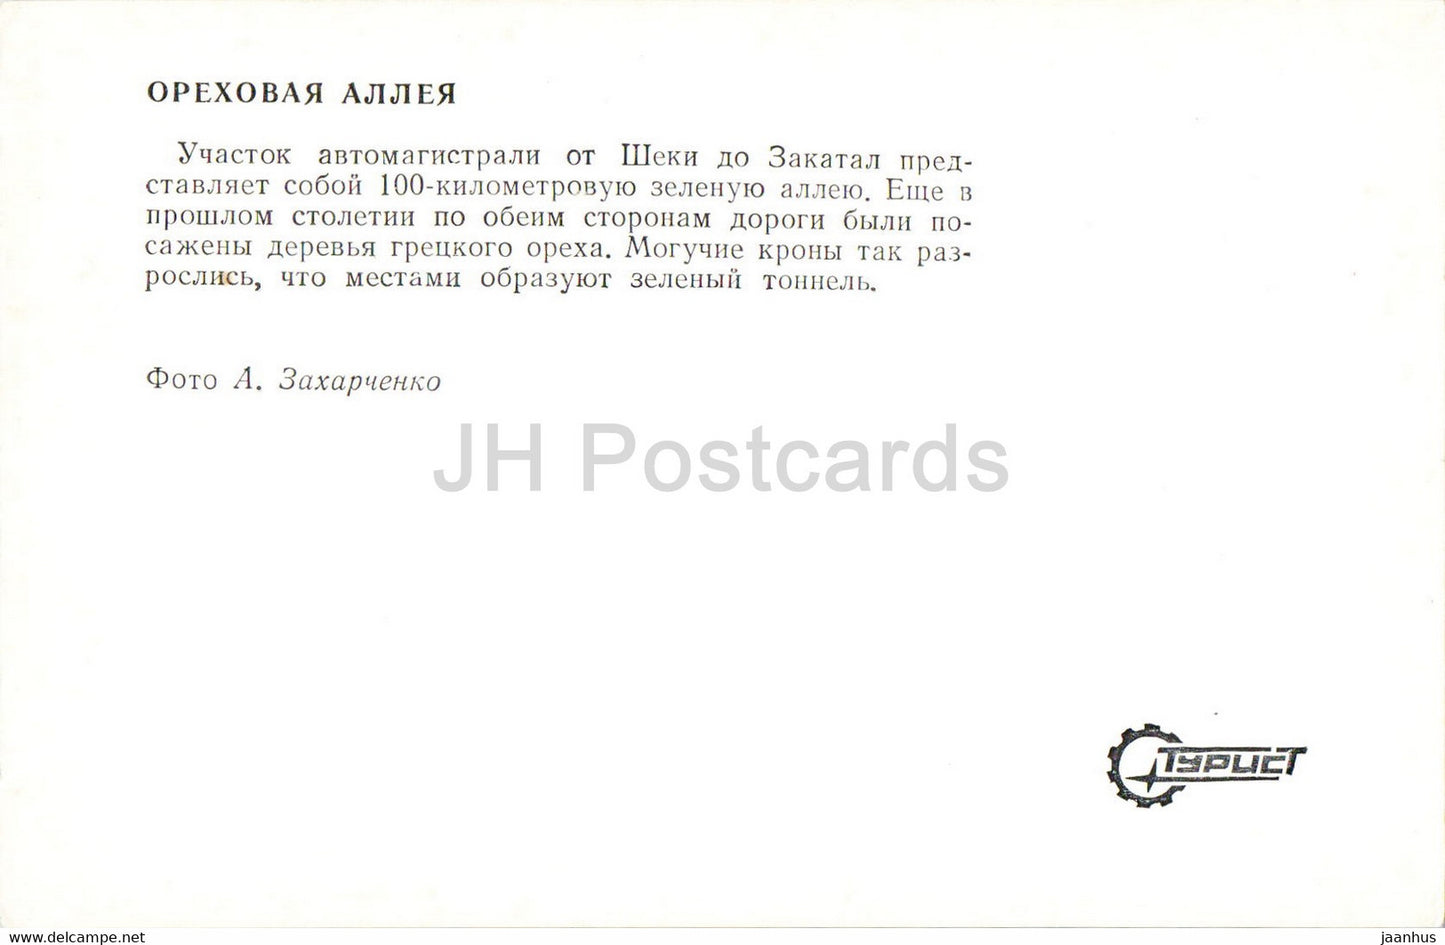 Zaqatala - Zakatala - Zakataly - Walnussallee - 1976 - Aserbaidschan UdSSR - unbenutzt